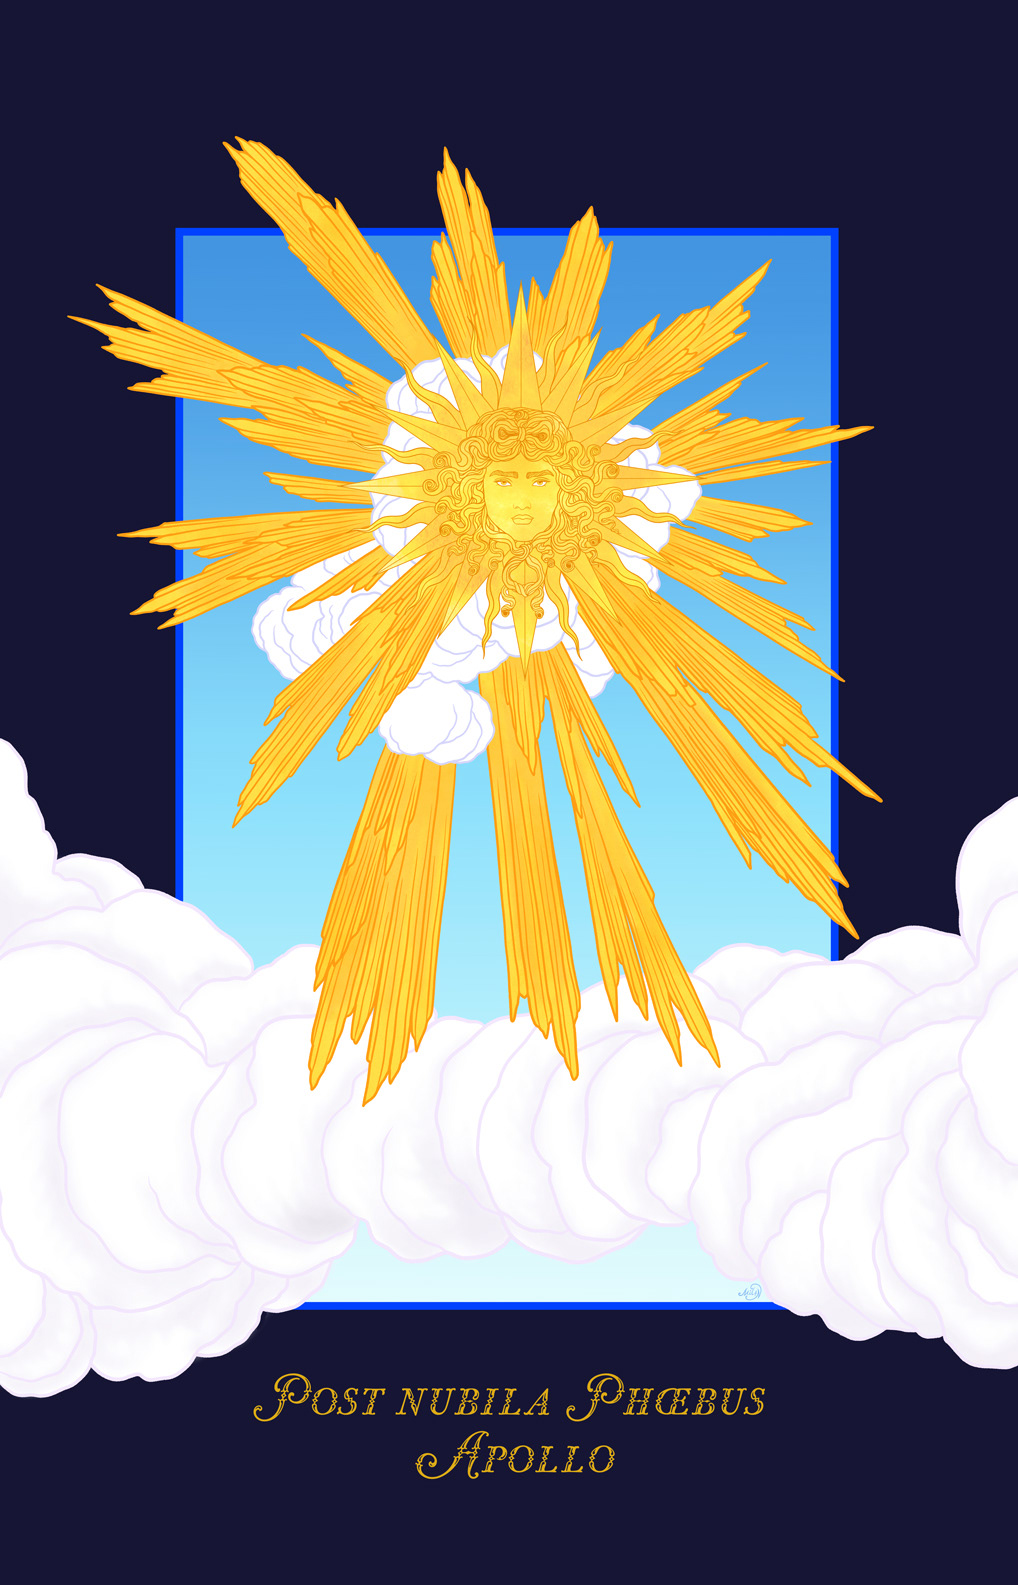 Apollo greek mythology mythology SKY apollon Sun sun rays